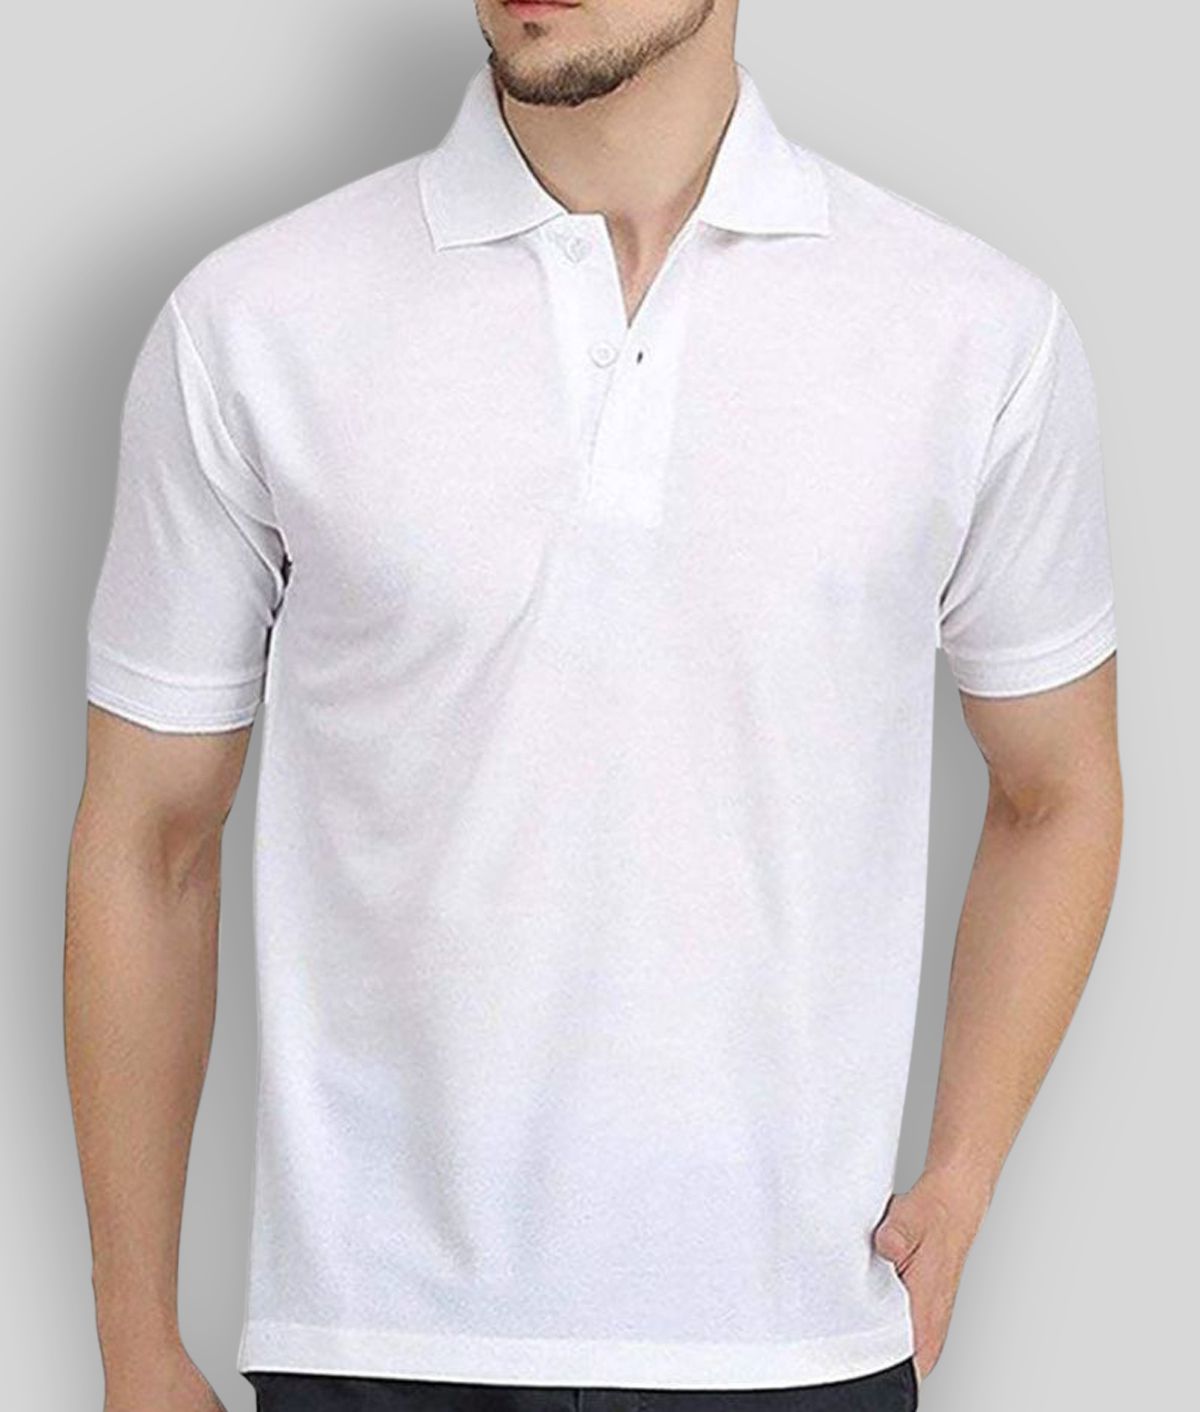     			FASHION365 - White Cotton Blend Slim Fit Men's Polo T Shirt ( Pack of 1 )